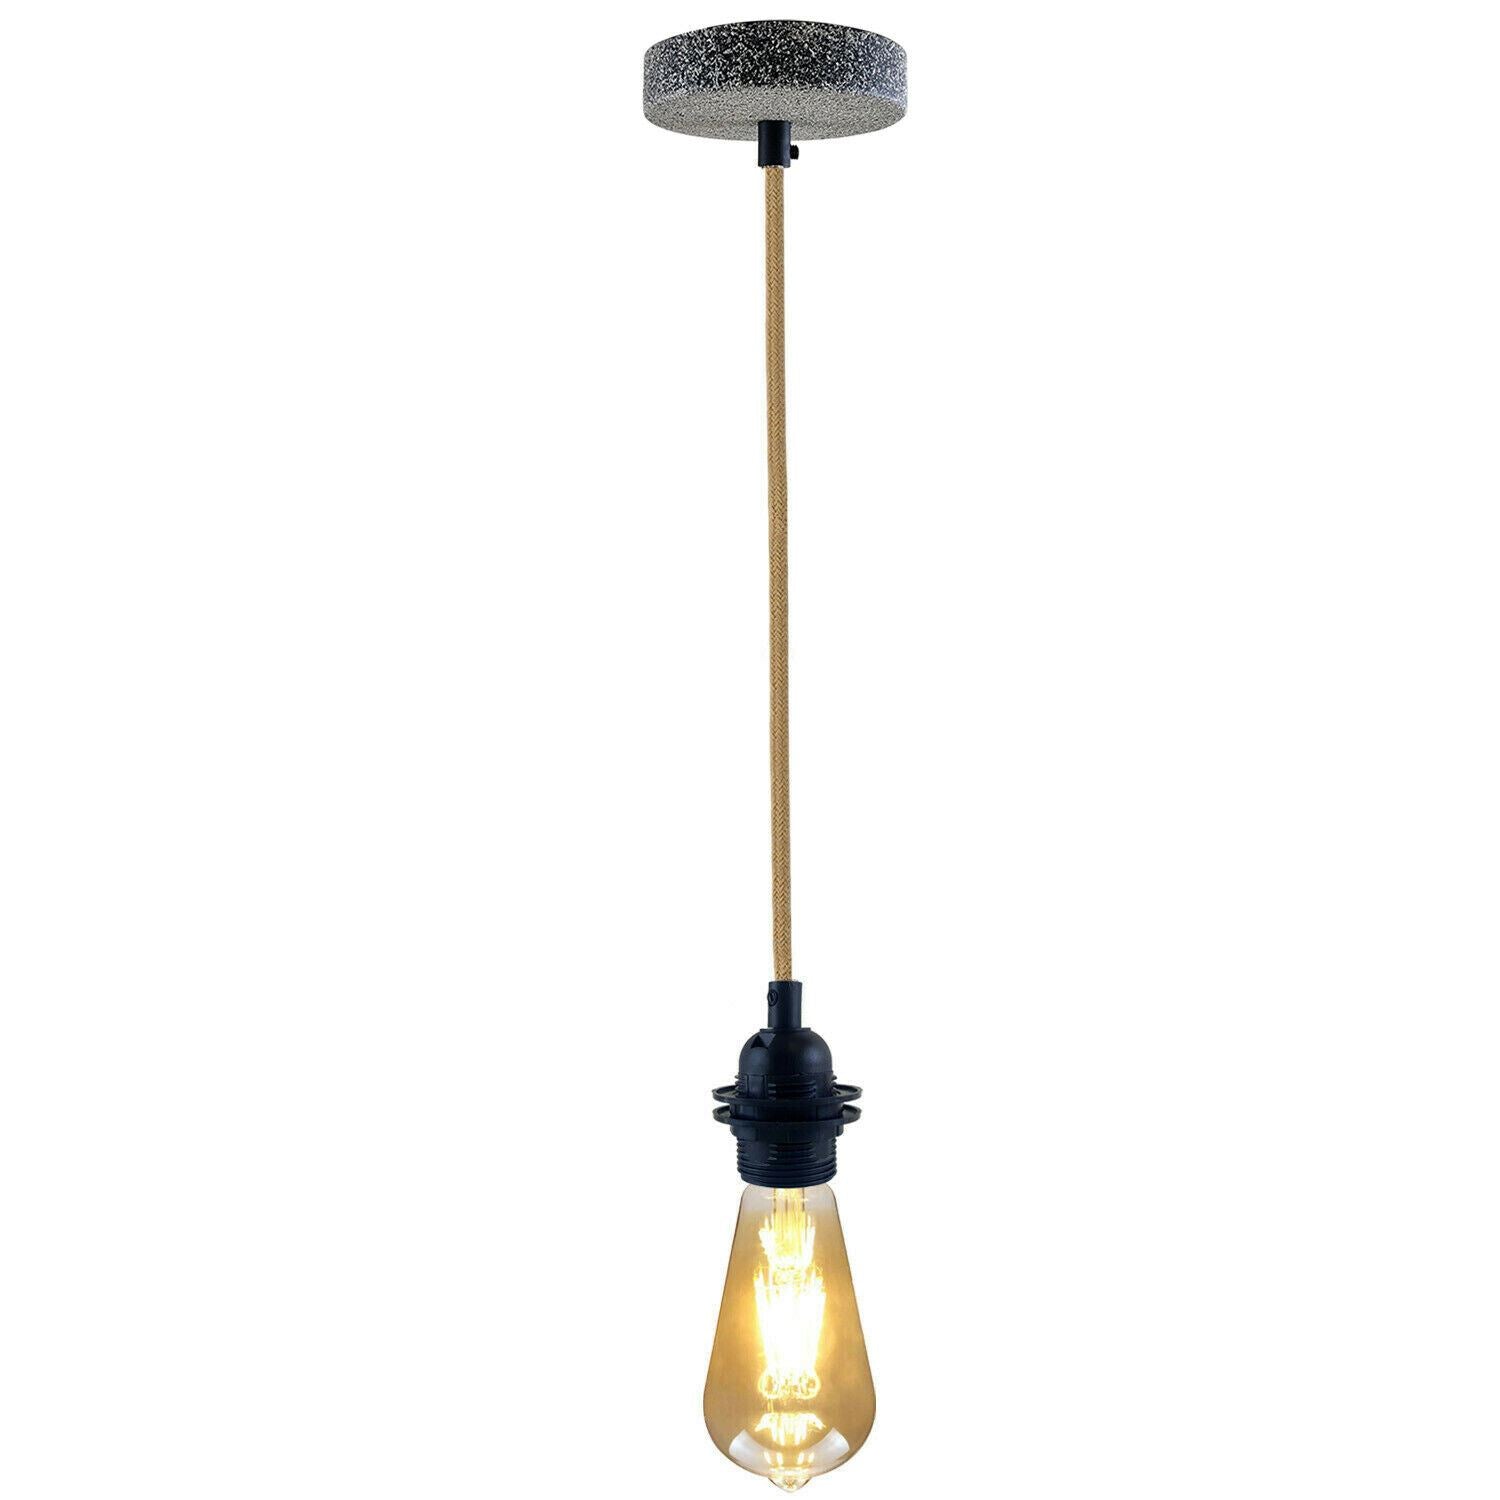 Industrial Vintage Retro Ceiling Rose Fabric Flex Hanging Pendant Lamp Holder~1245 - electricalsone UK Ltd